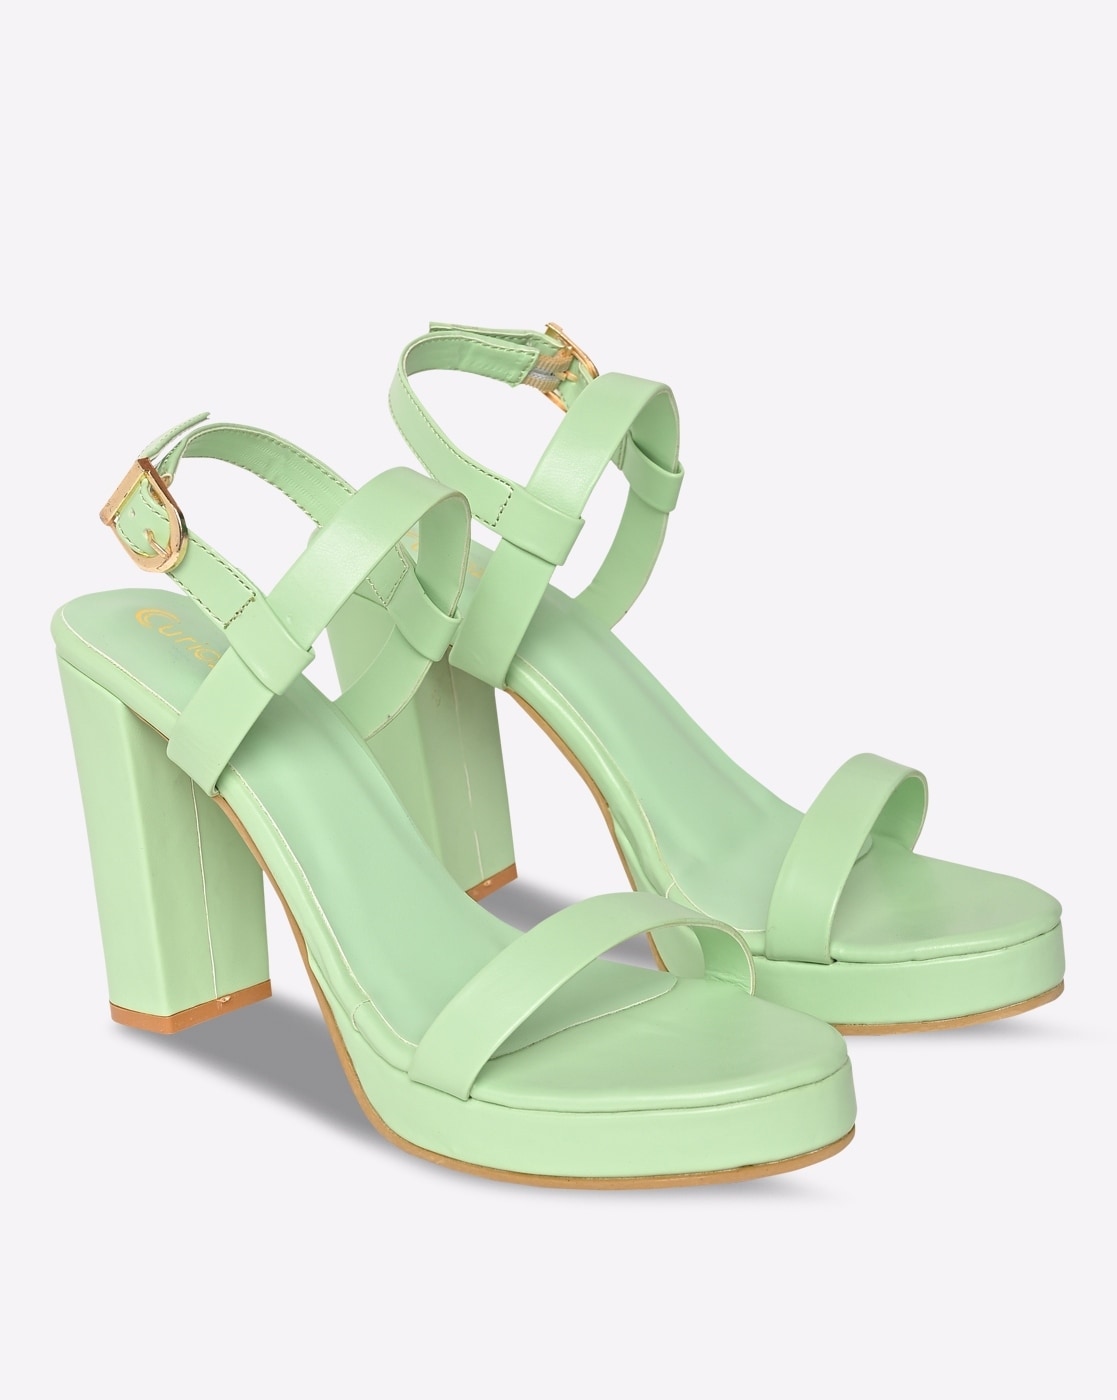 Sandals - Neon green - Ladies | H&M IN